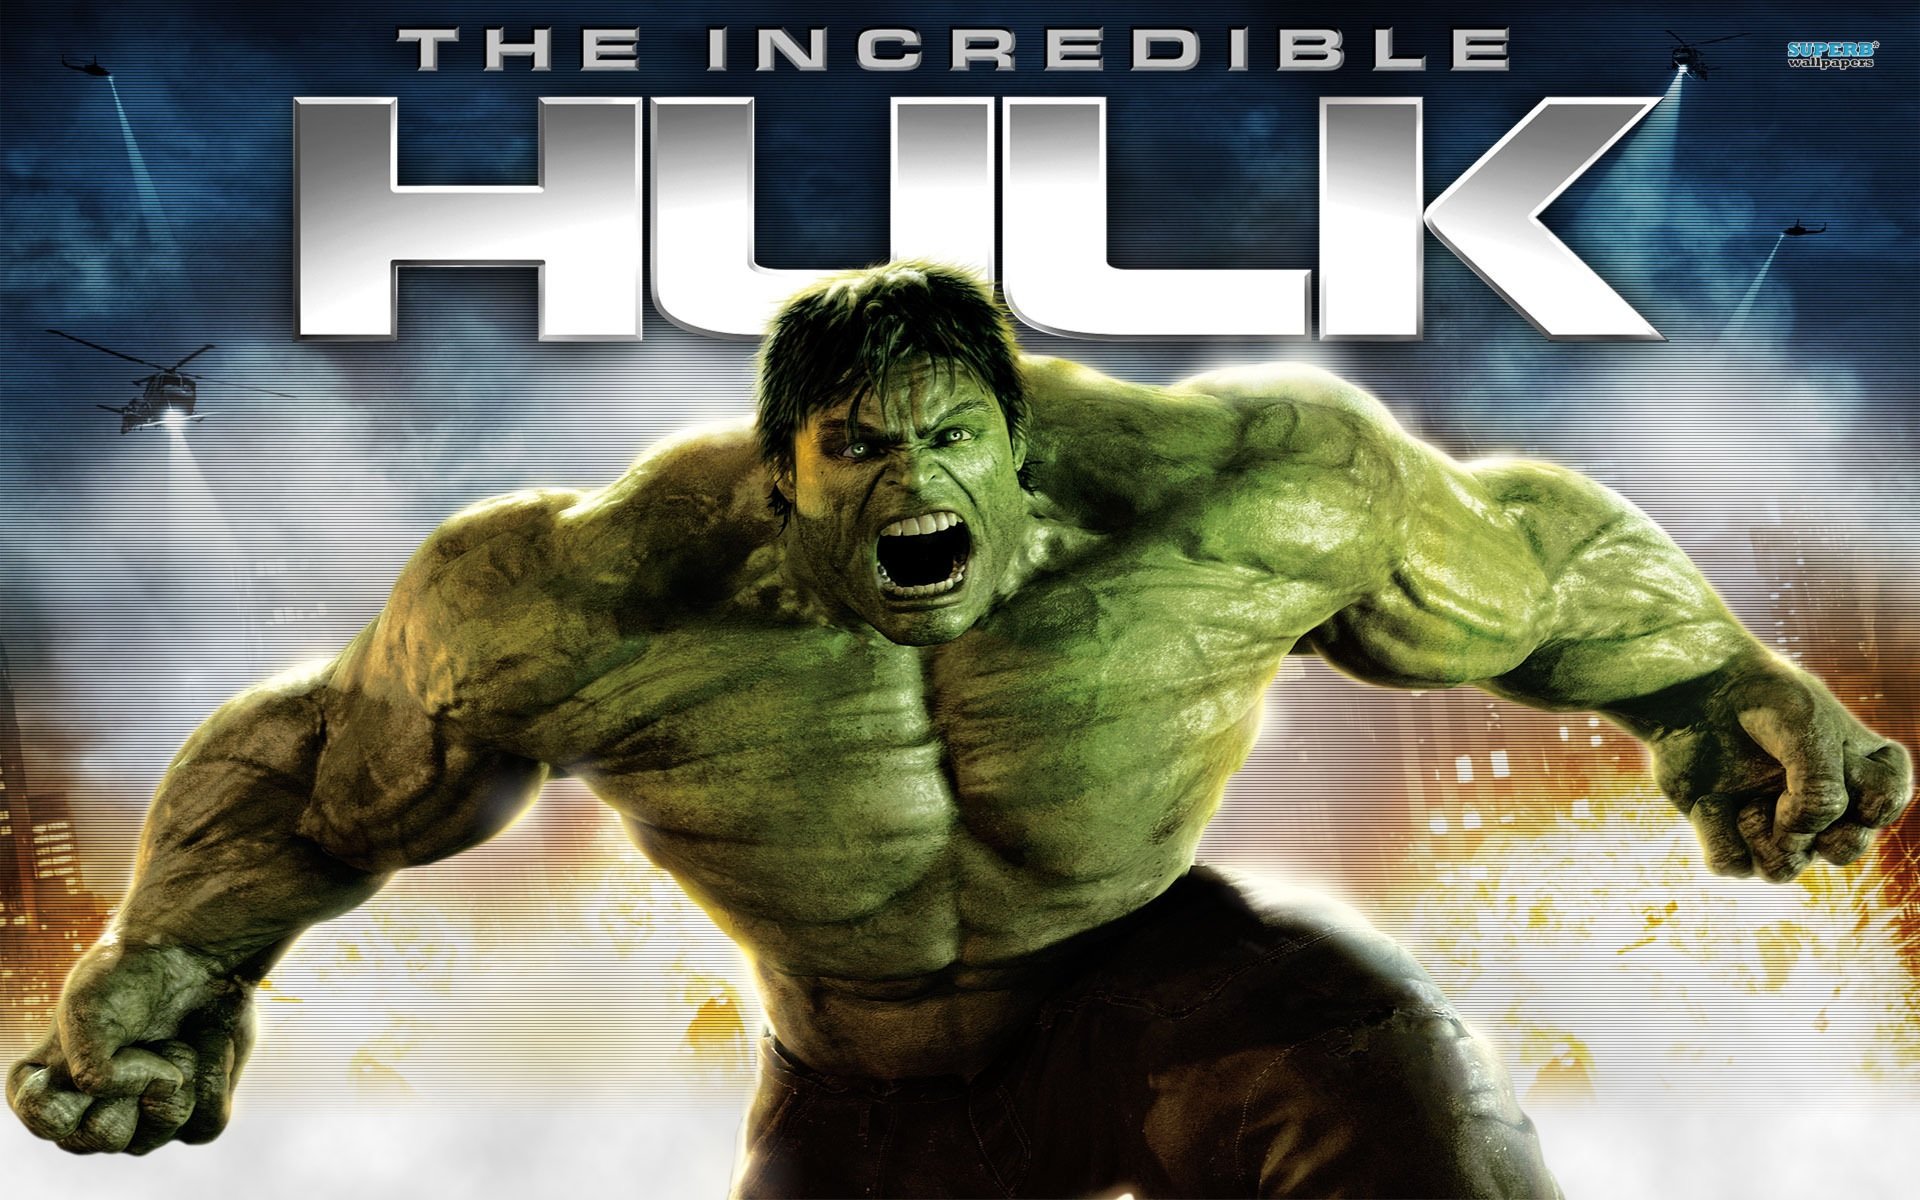 The Incredible hulk 50 lines